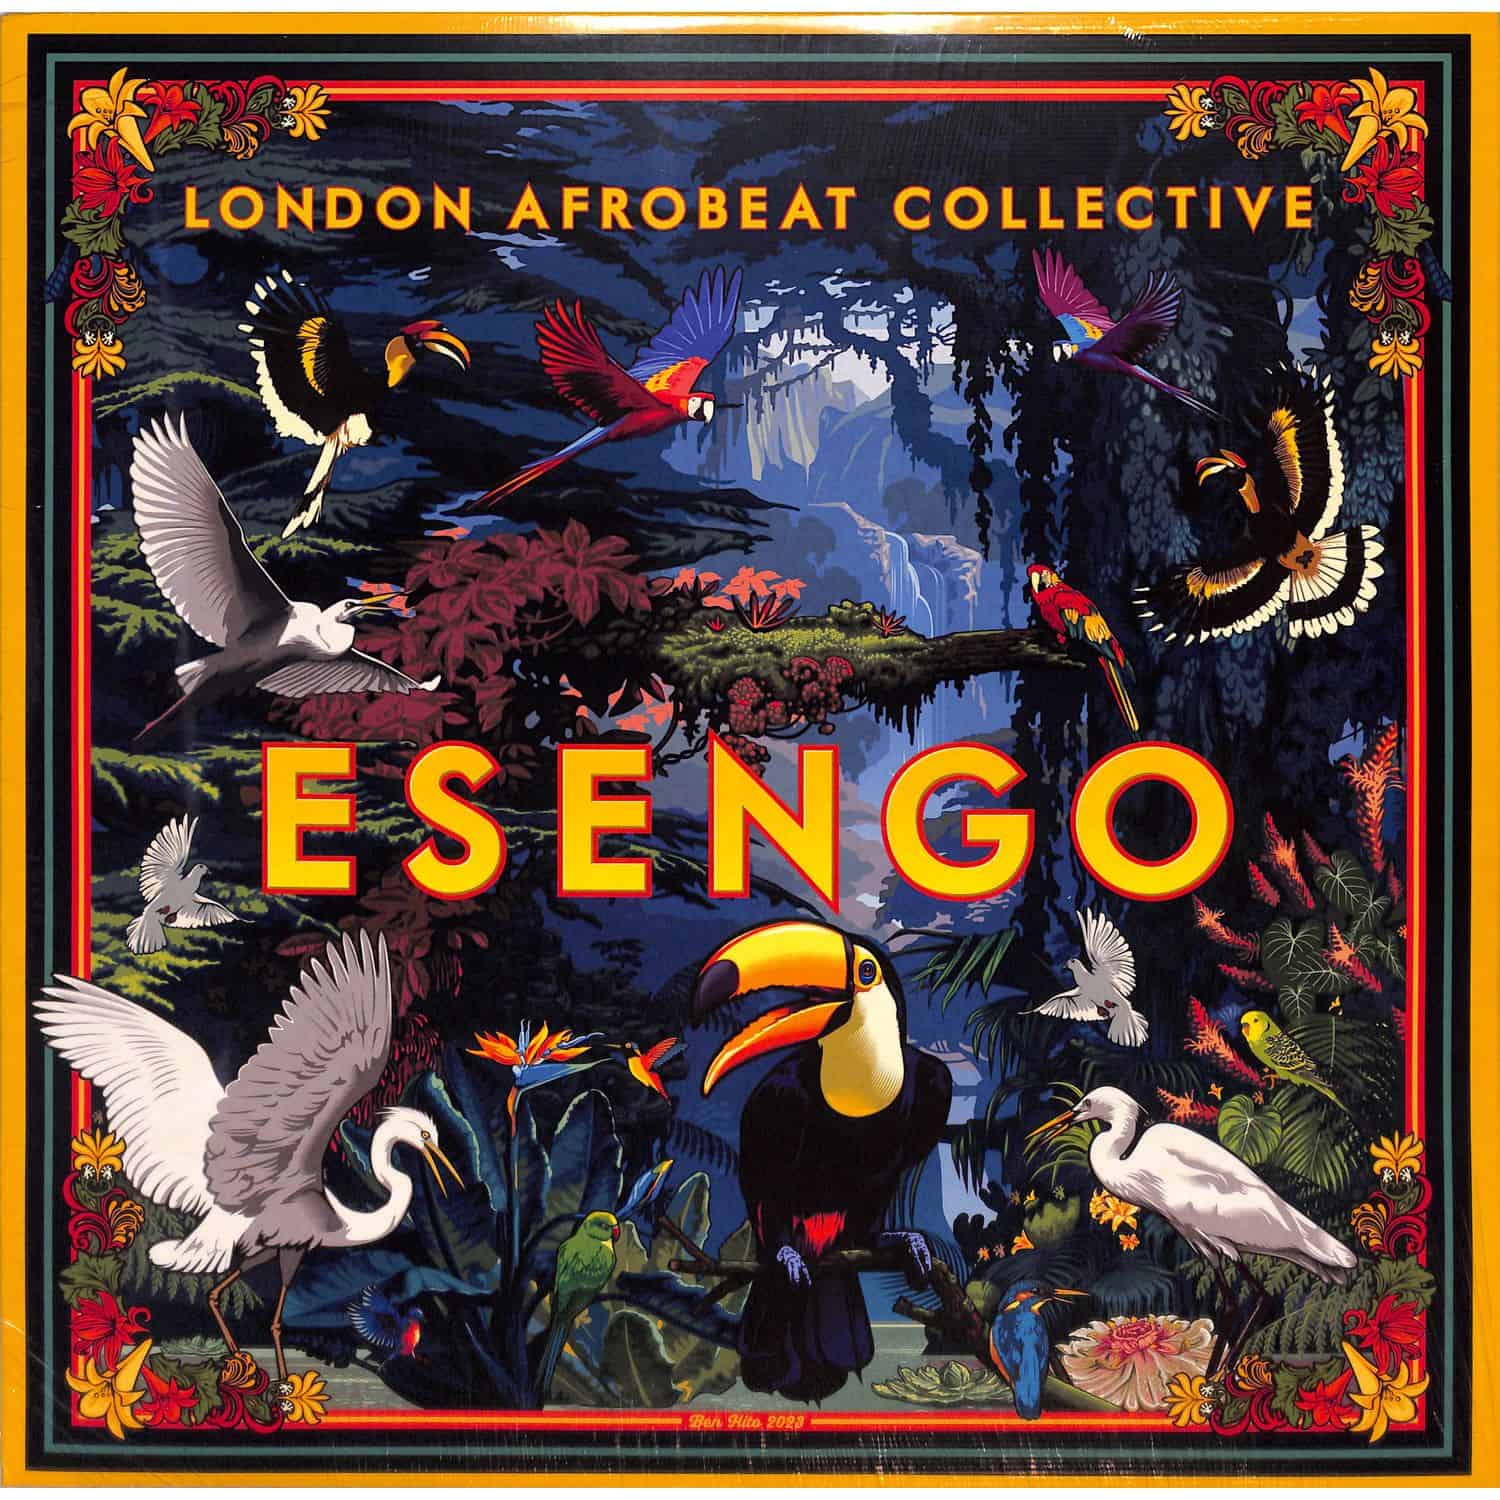 London Afrobeat Collective - ESENGO 